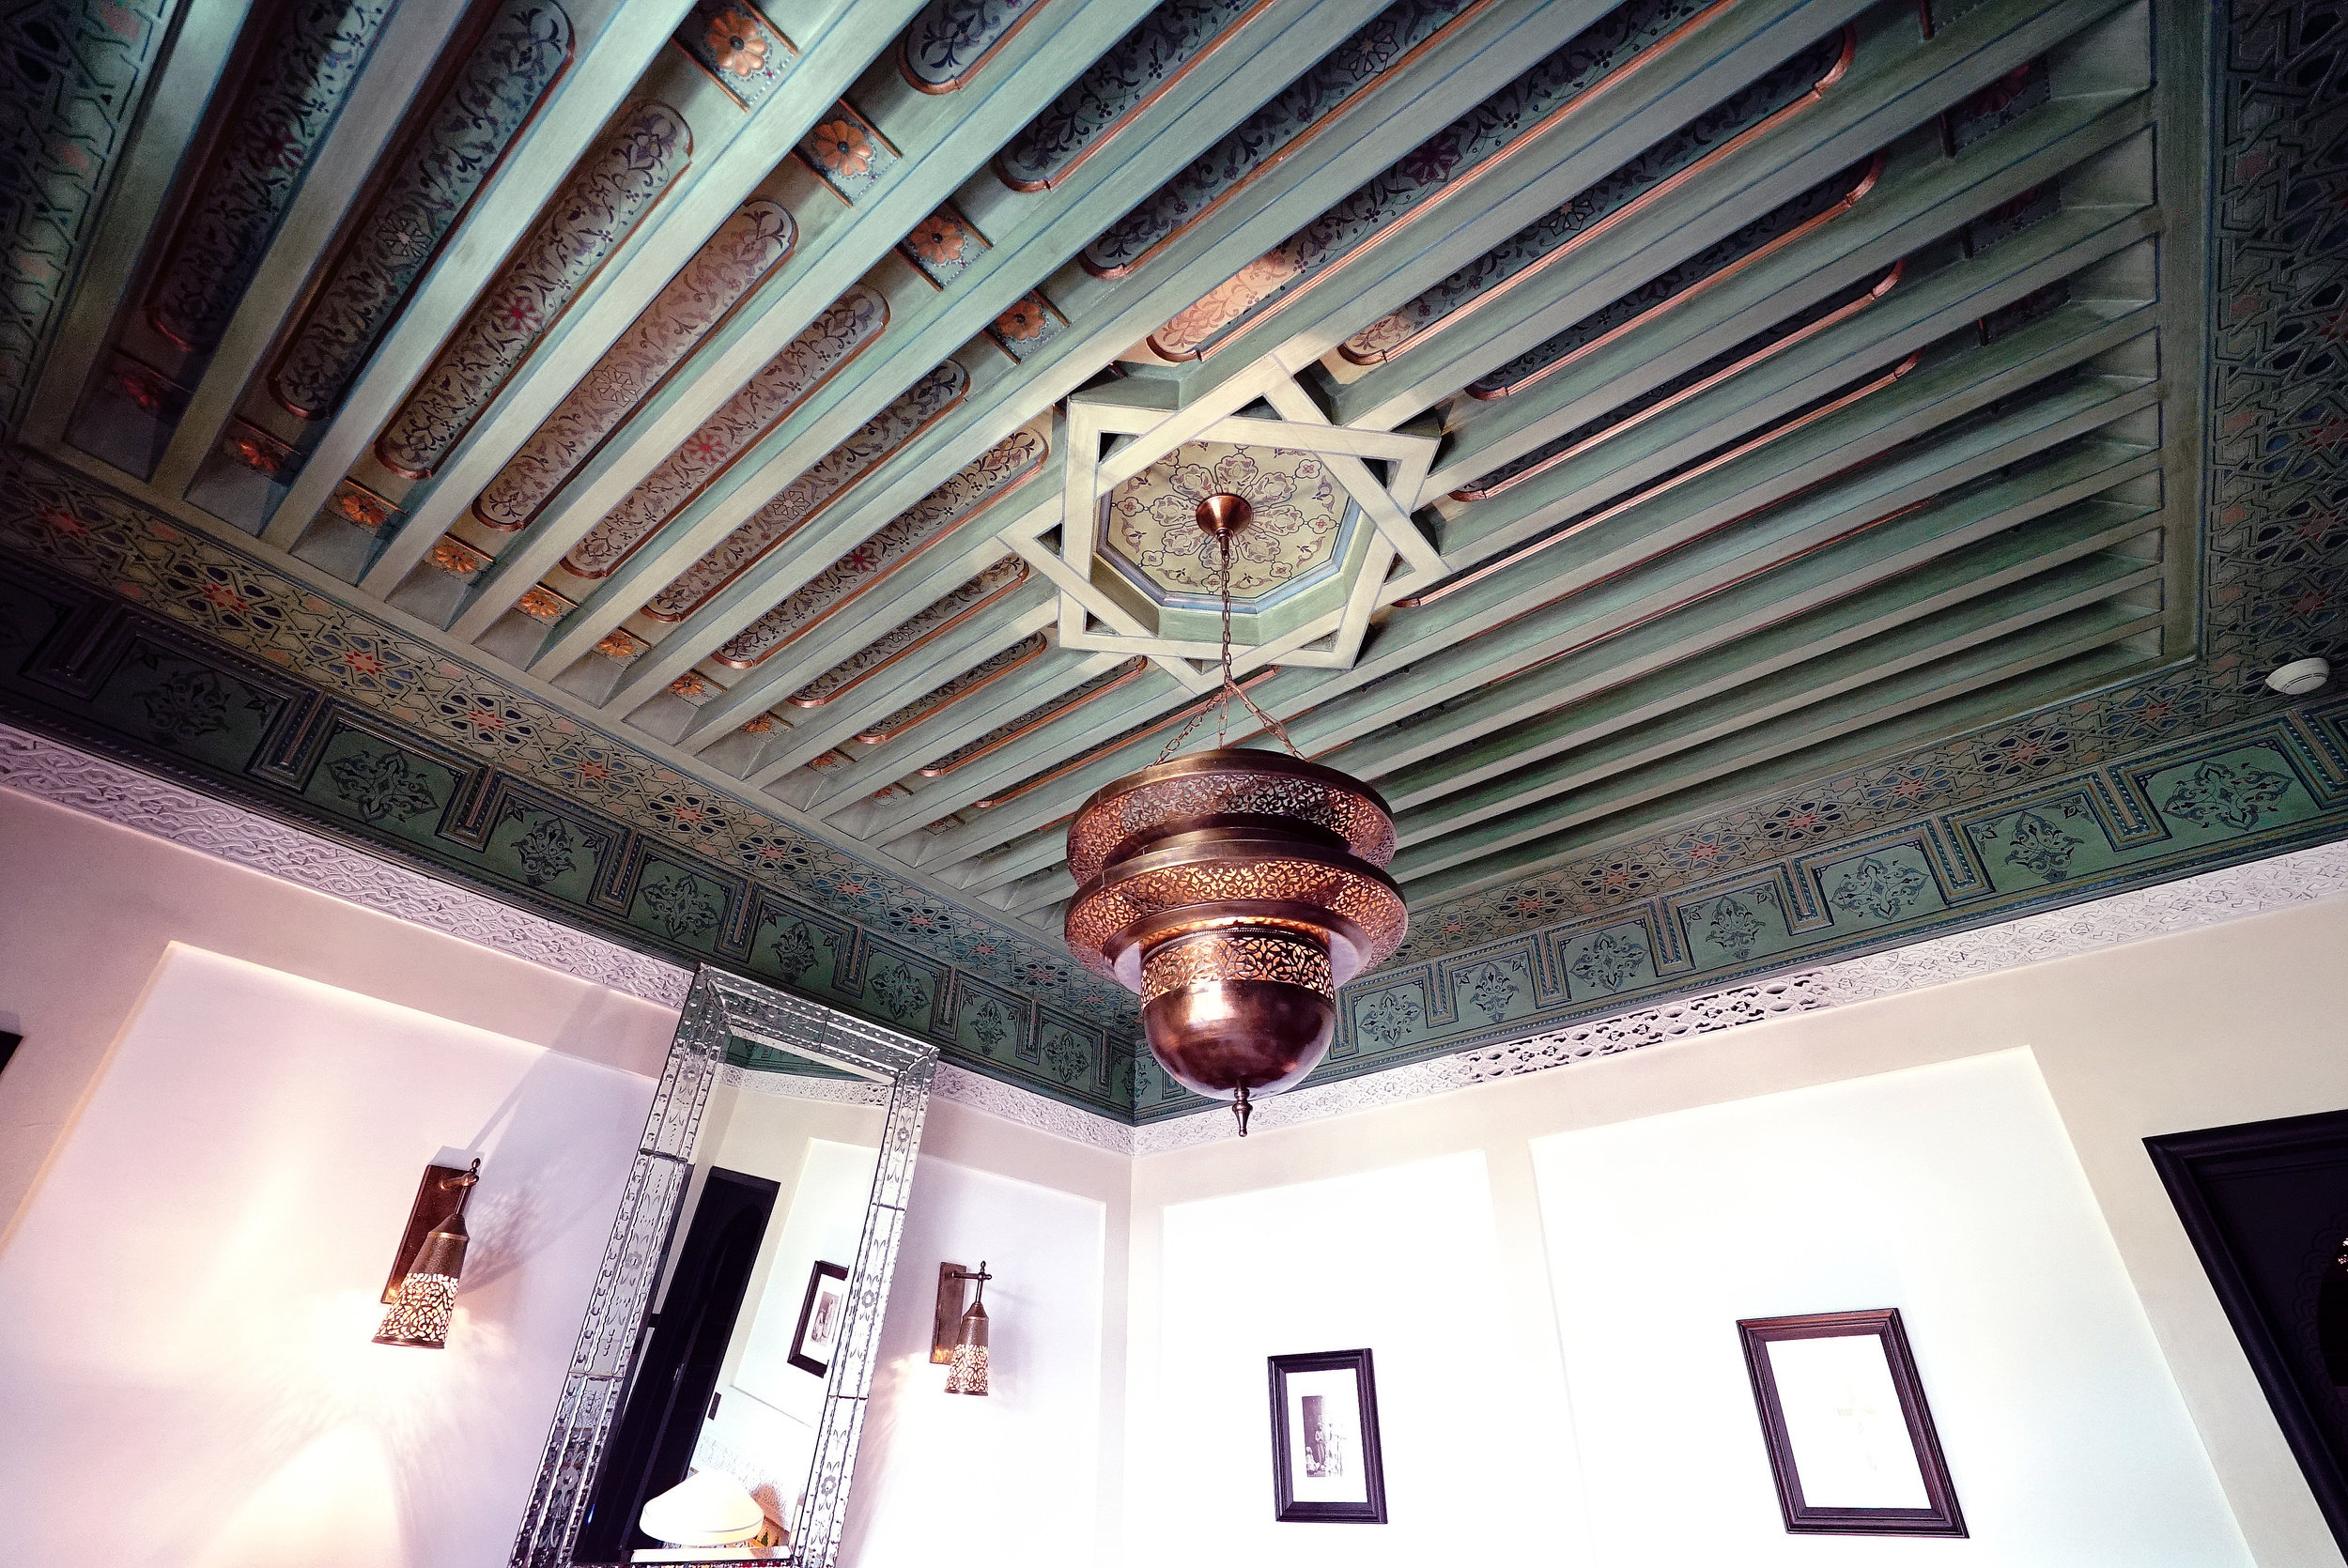 La Mamounia Morocco Room Suite Ceiling.jpg